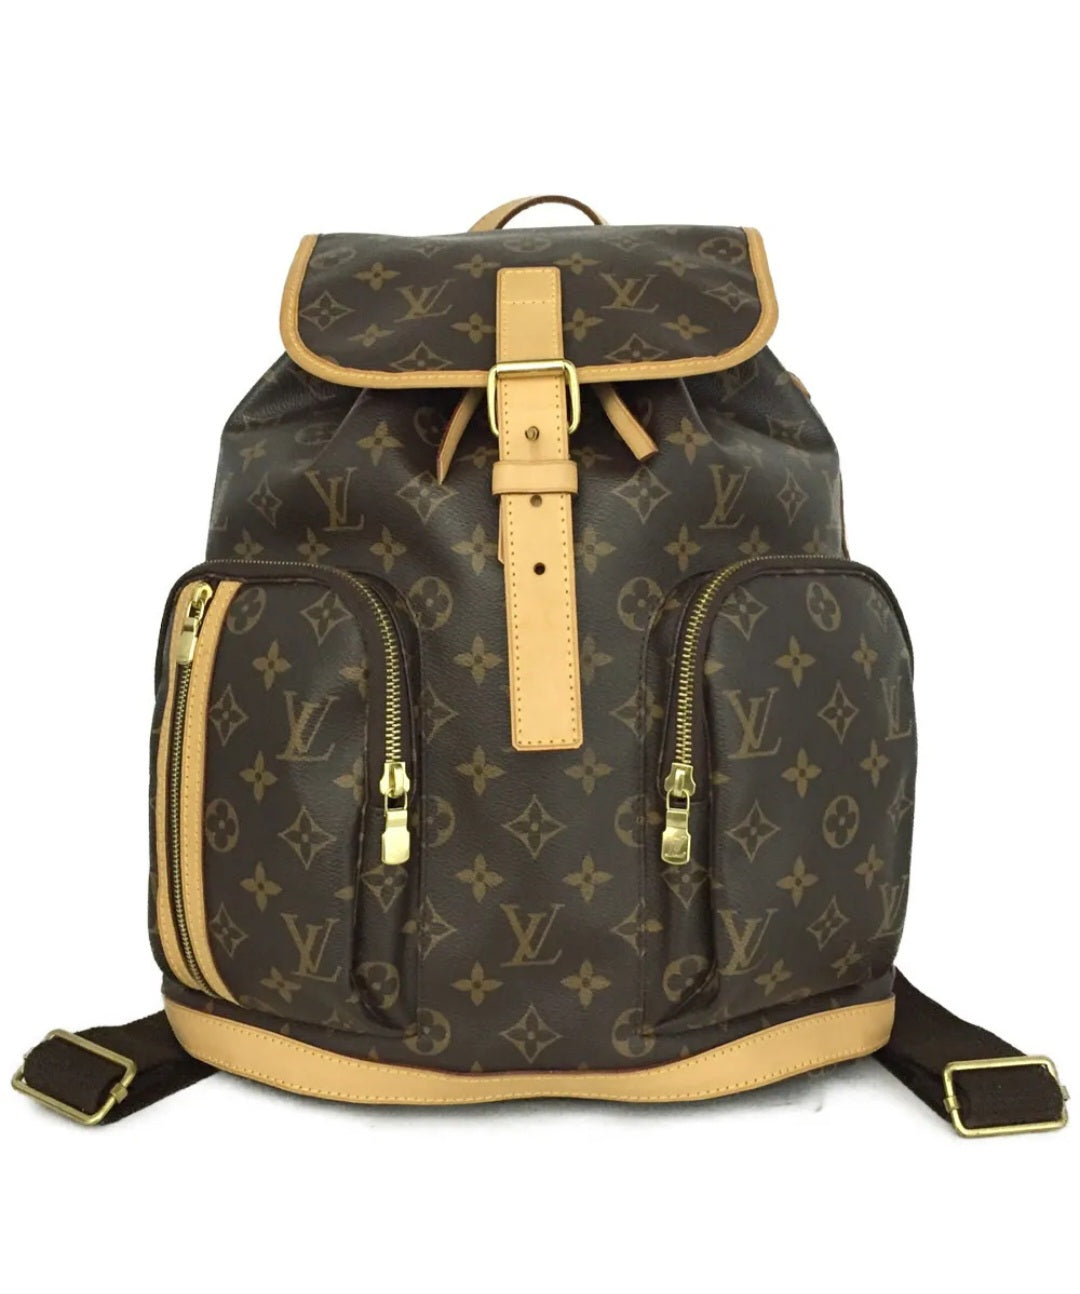 Preowned Louis Vuitton Monogram Sac a Dos Bosphor Backpack